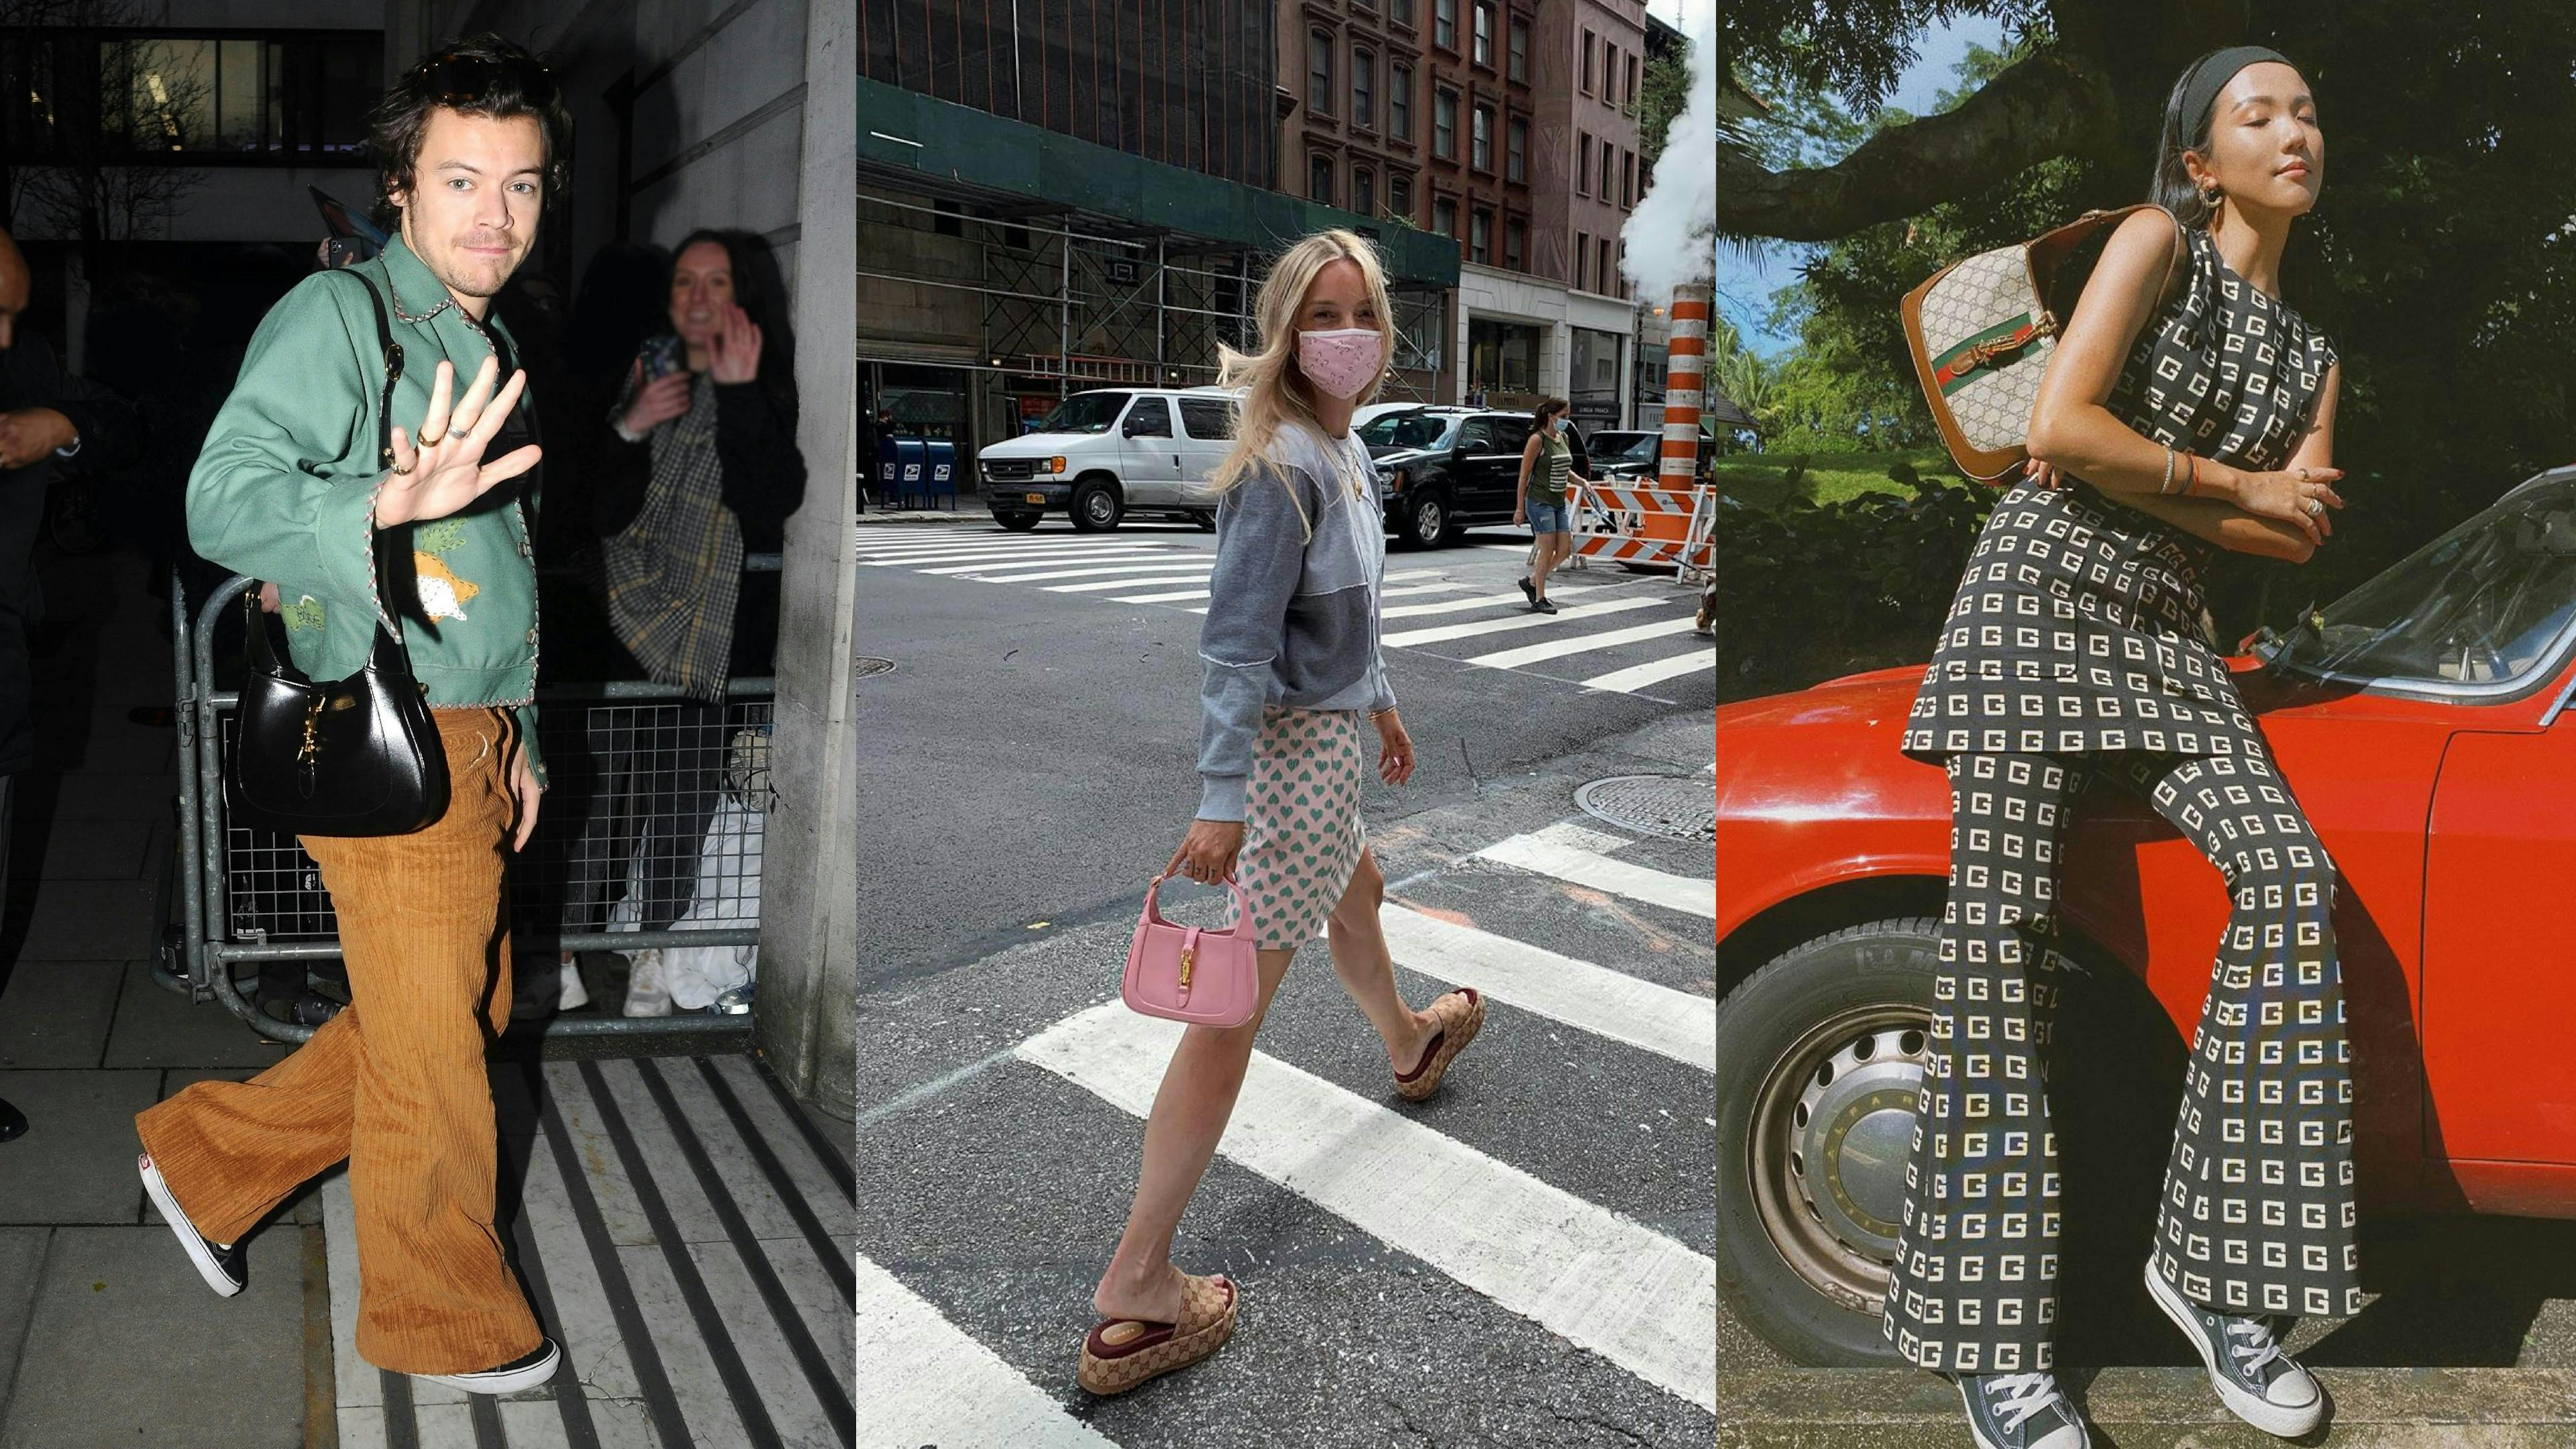 tarmac road person clothing pedestrian zebra crossing metropolis building urban female